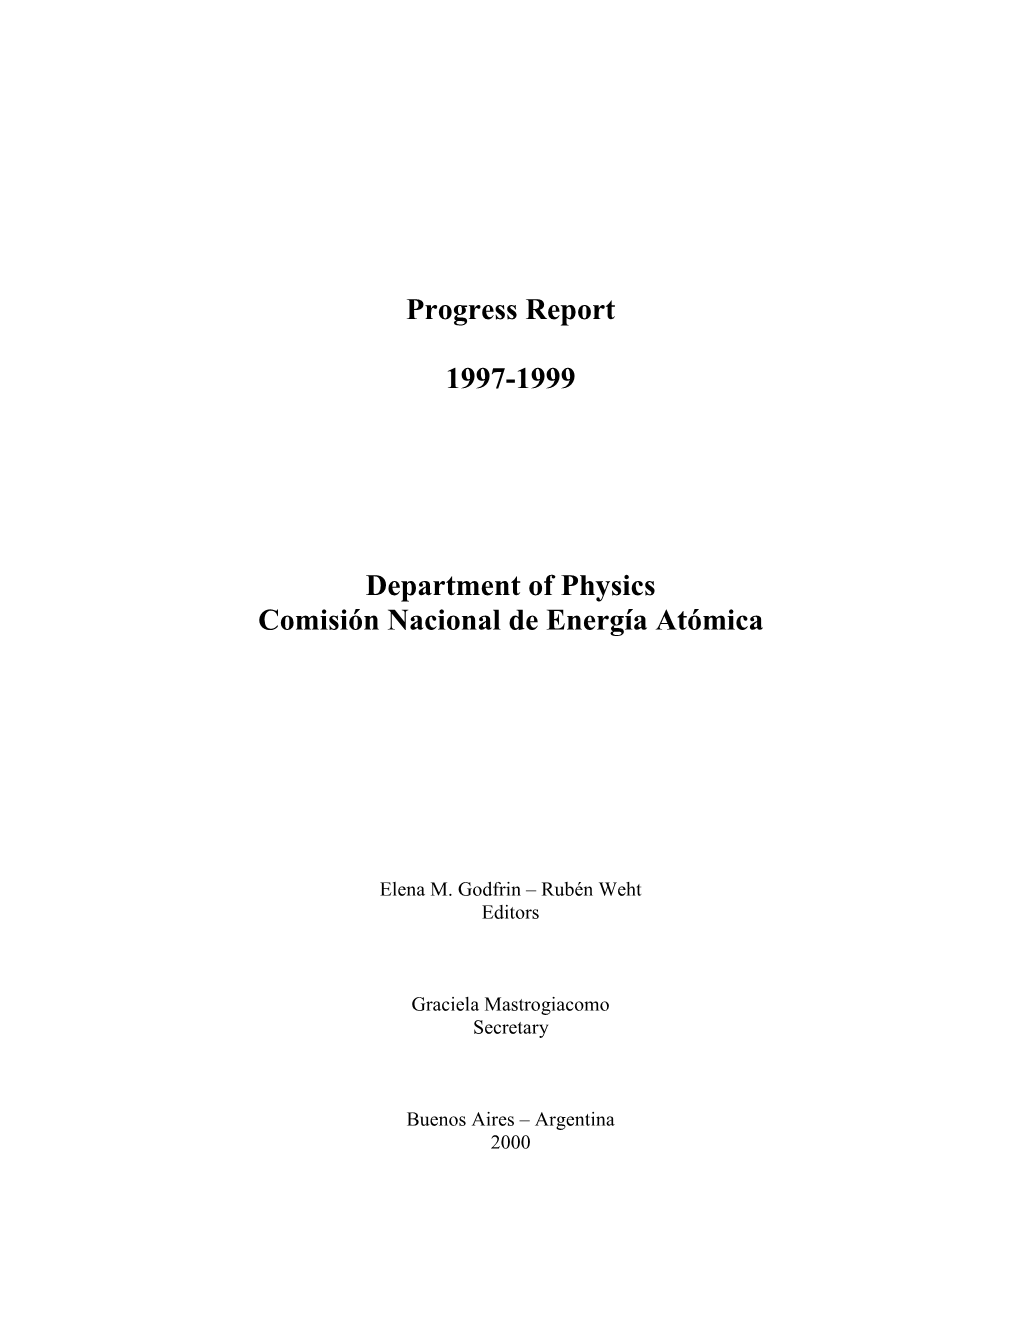 Progress Report 1997-1999 Department of Physics Comisión Nacional De Energía Atómica